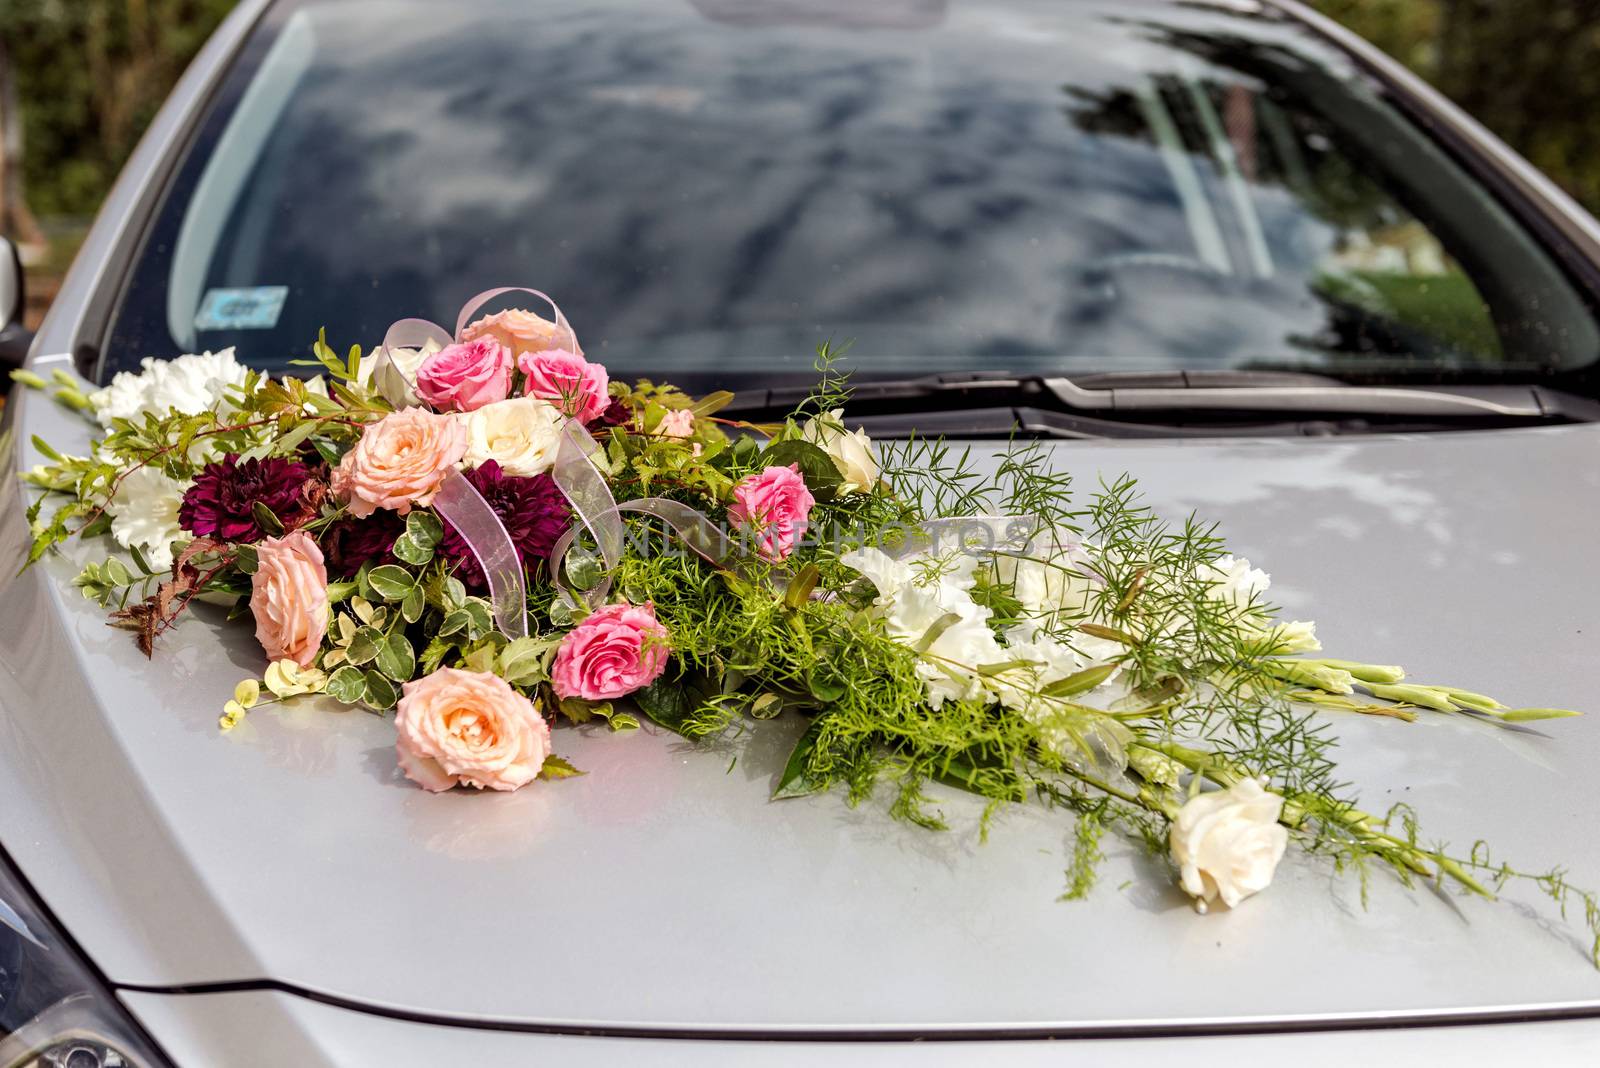 Flower decoration on gray wedding car bonnet.